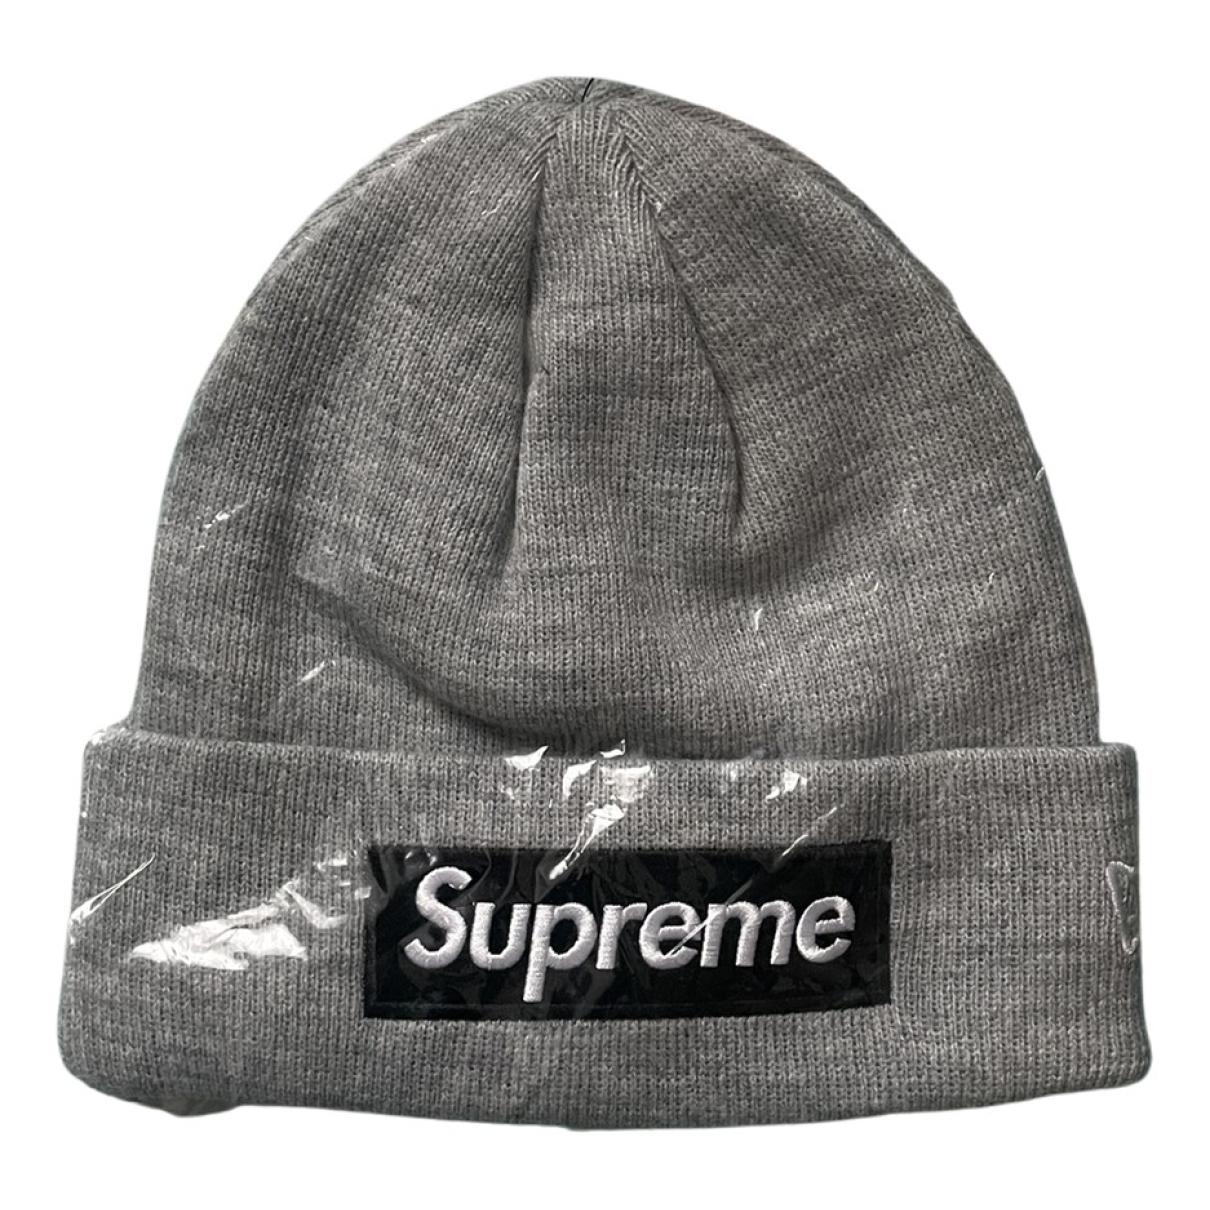 Box logo hat Supreme Grey size M International in Cotton - 32199967